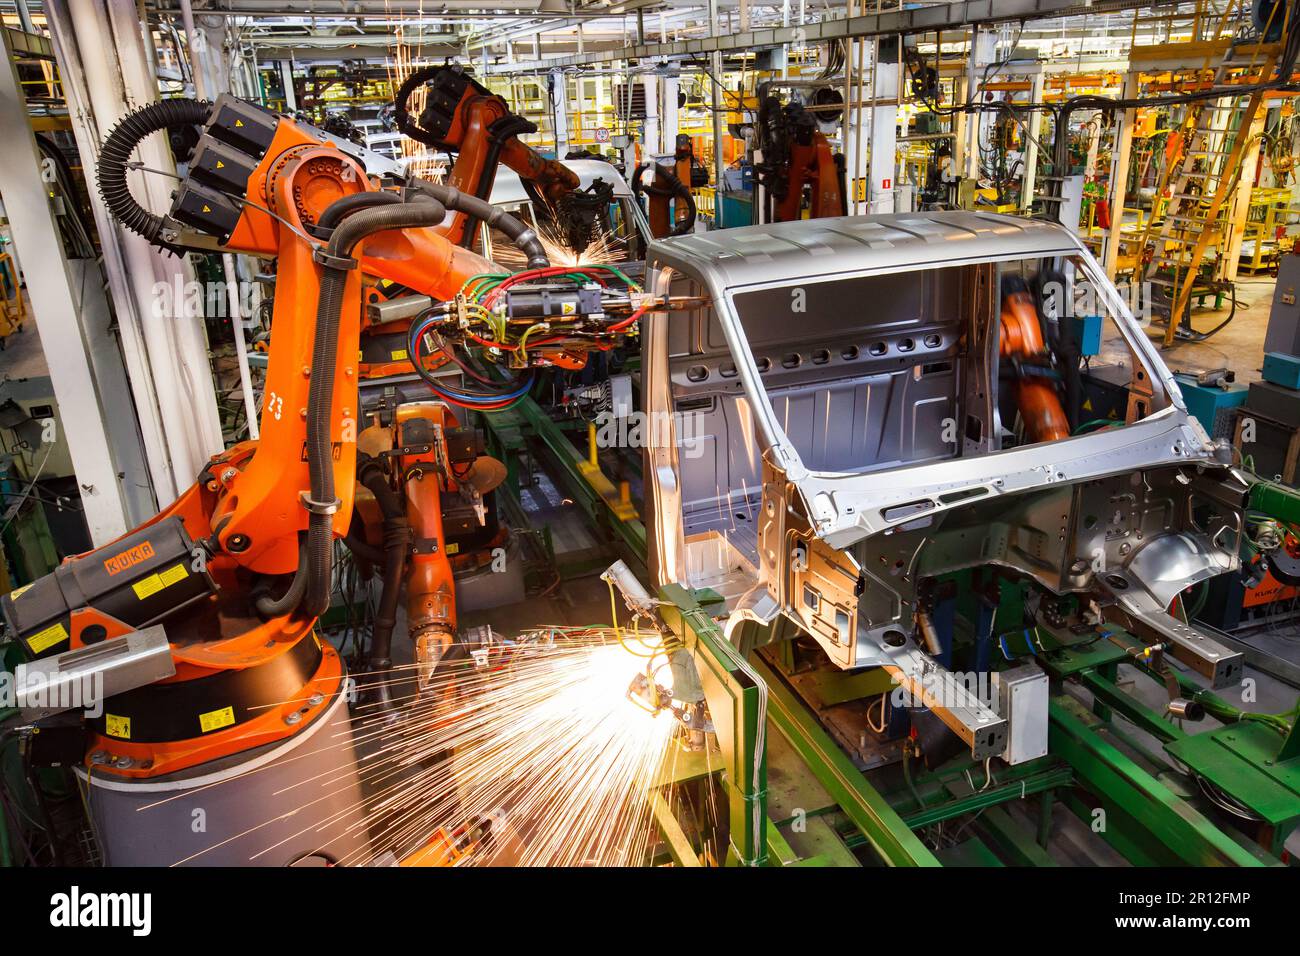 Nizhny Novgorod, Russia - November 21, 2020: GAZ car production plant. Automatic car bodies welding line. Kuka robot manipulators, welding sparks Stock Photo